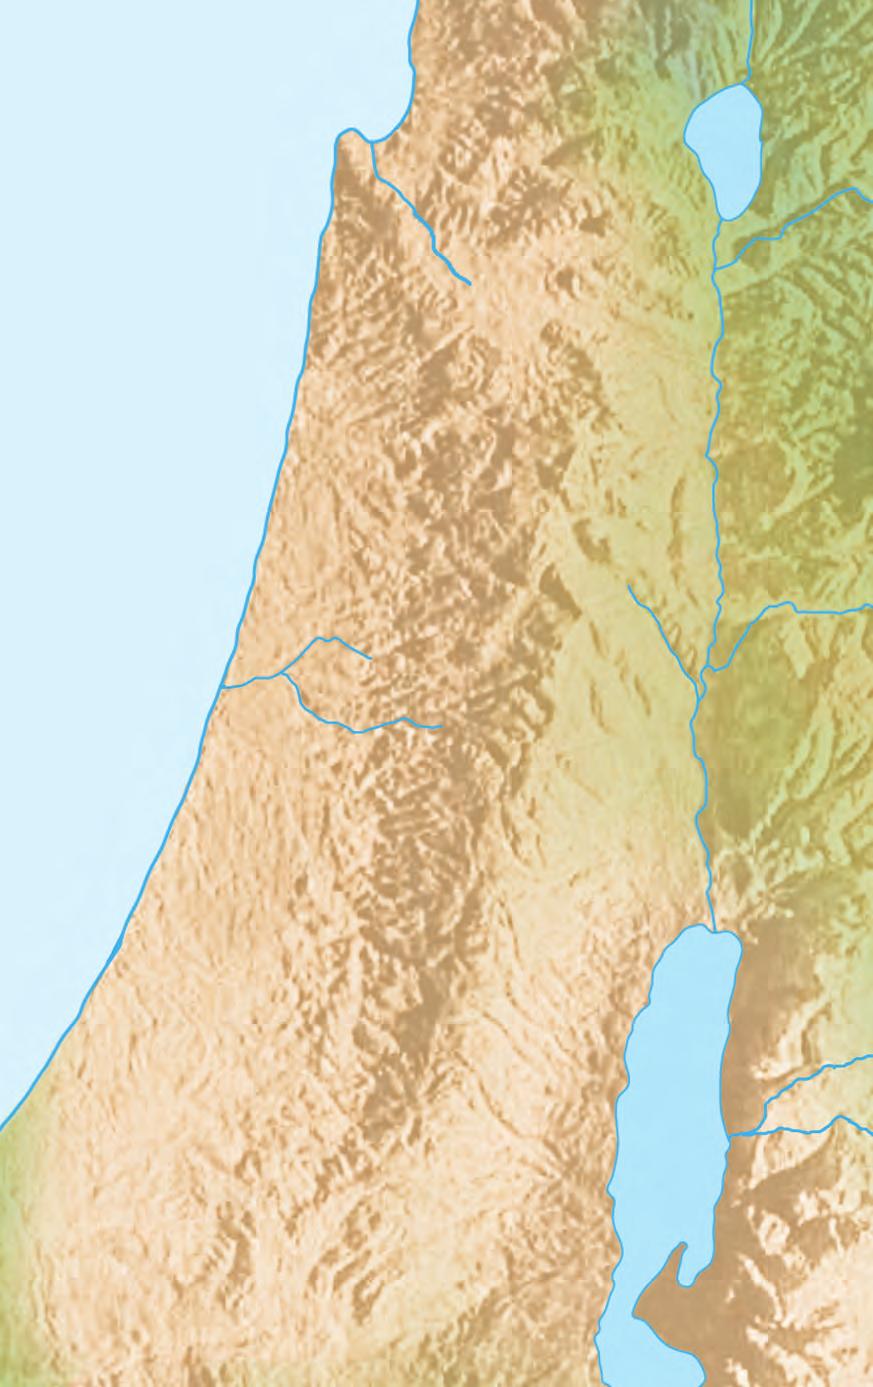 Mt. Carmel Sea of Galilee (Chinnereth) Map 1 Kishon Nazareth Yarmuk Mediterranean Sea Jordan Yarkon Shechem